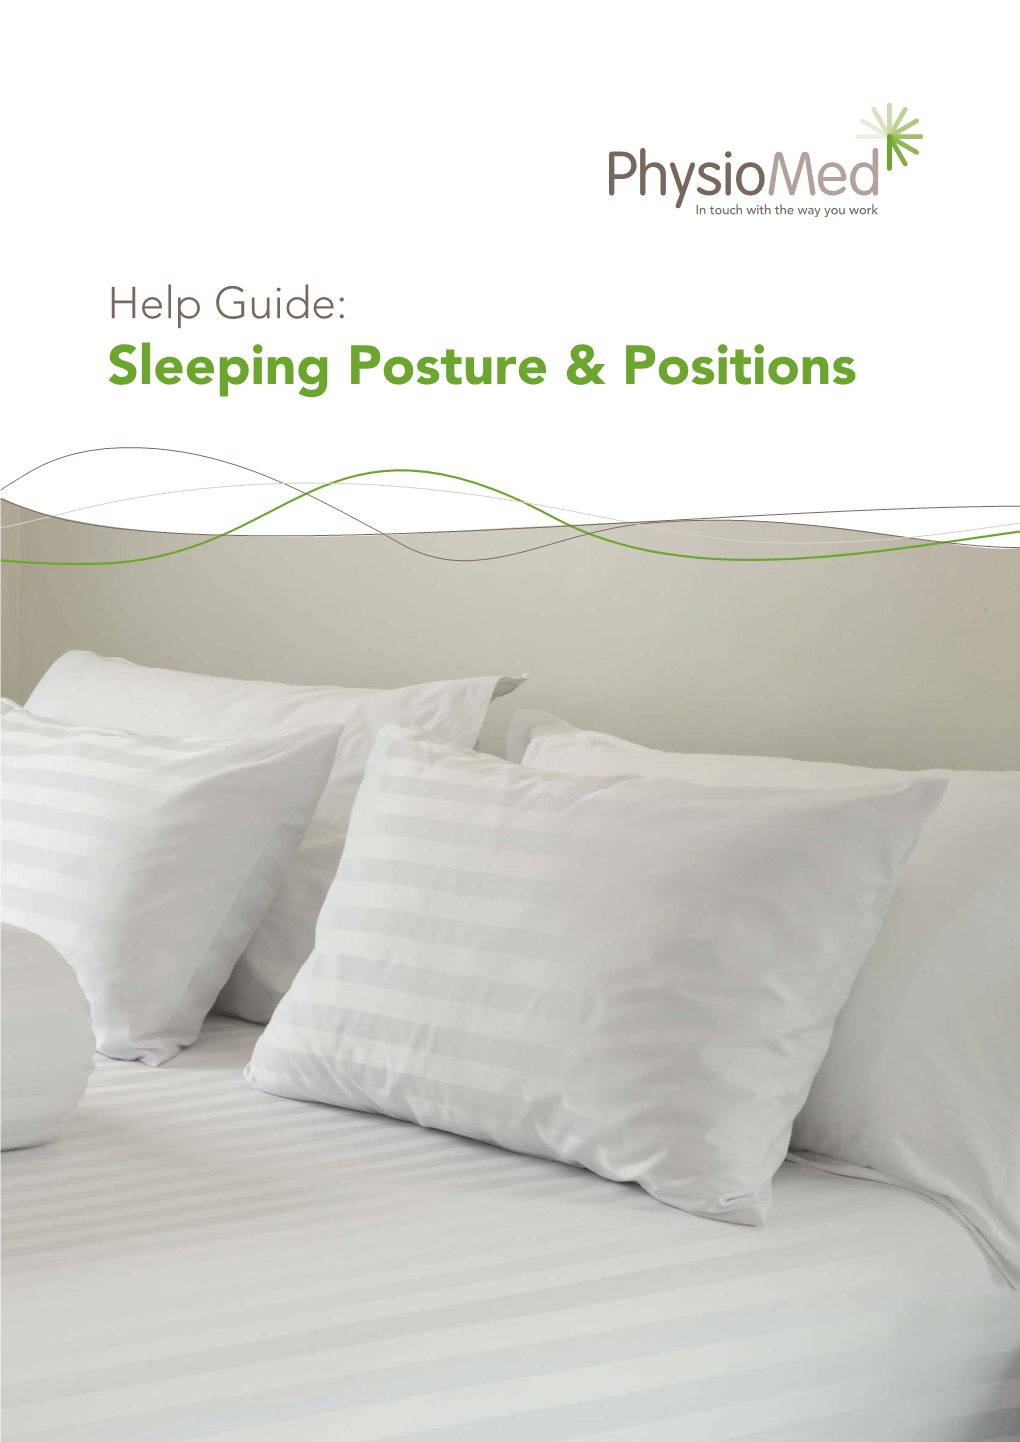 Sleeping Posture & Positions